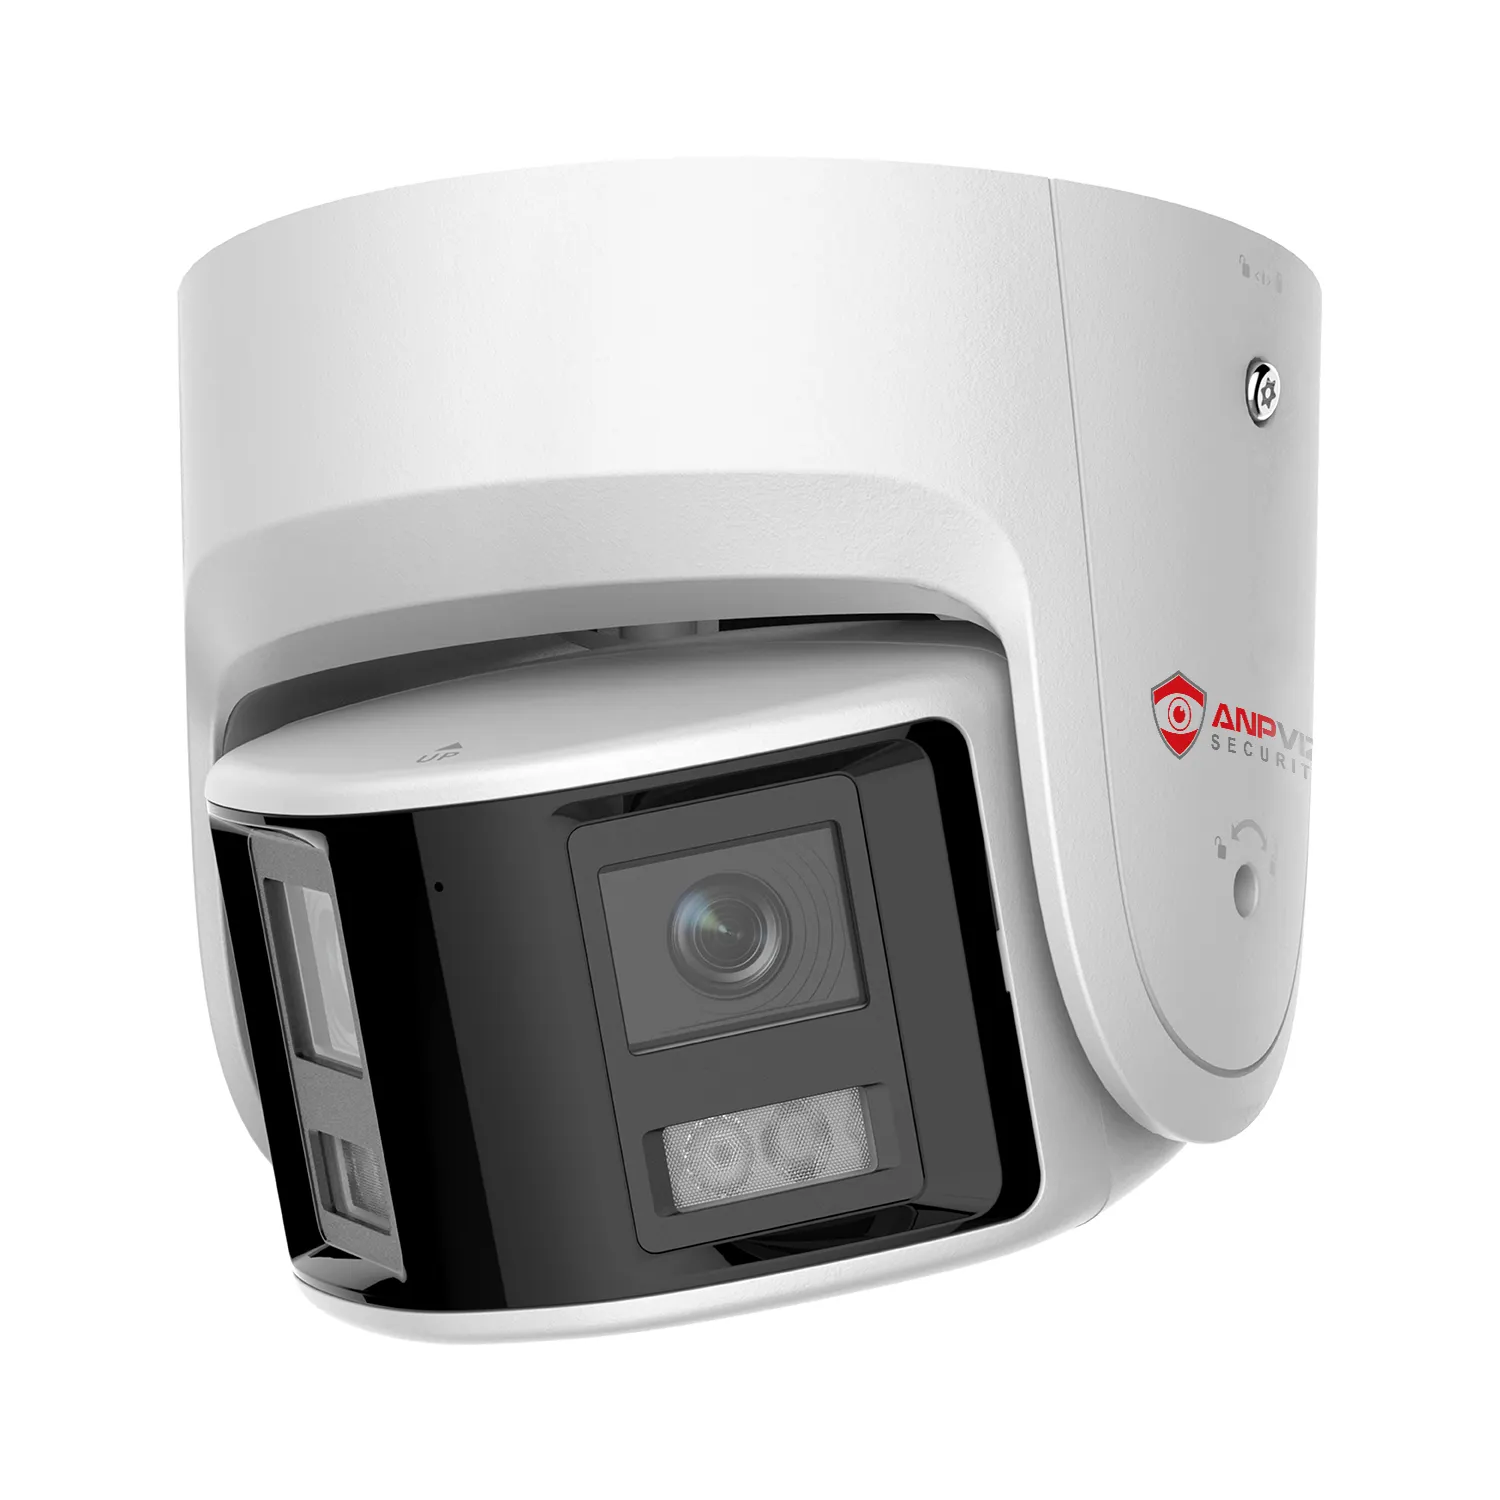 ANPVIZ POE IP Kamera CCTV 6MP Kamera Panorama Lensa Ganda 180 Derajat Gambar Manusia/Kendaraan Deteksi Suara & Flash Alarm 2 Arah Bicara